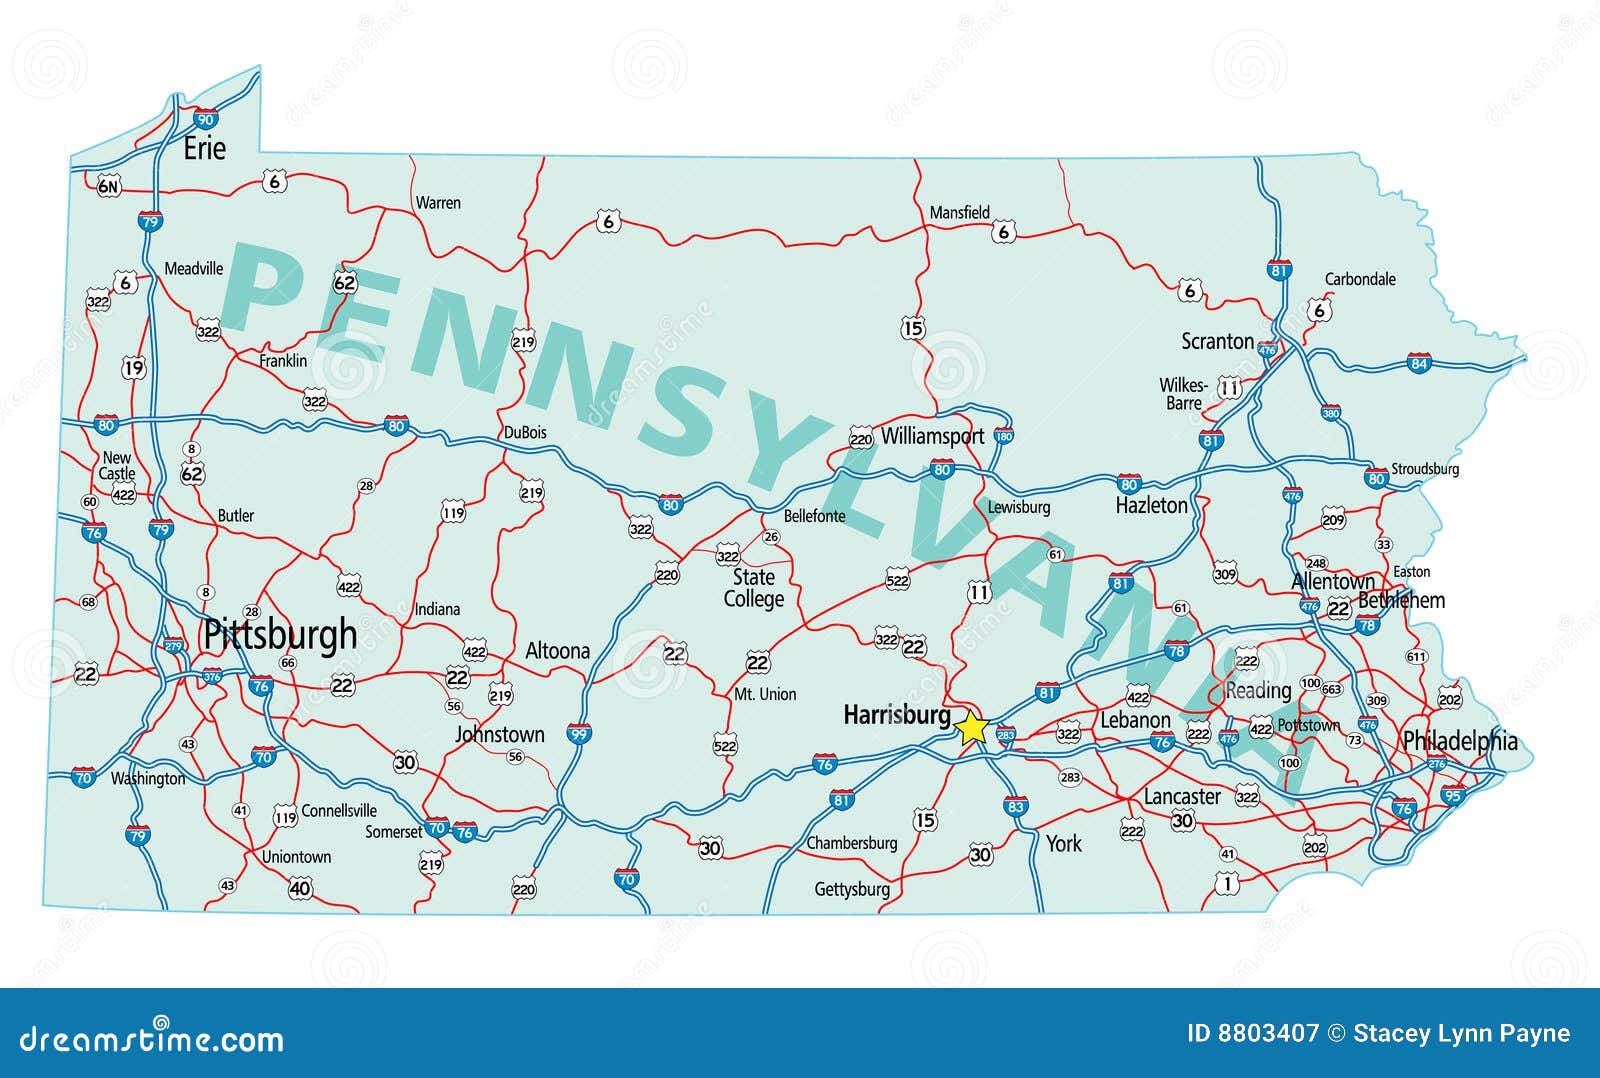 pennsylvania interstate map